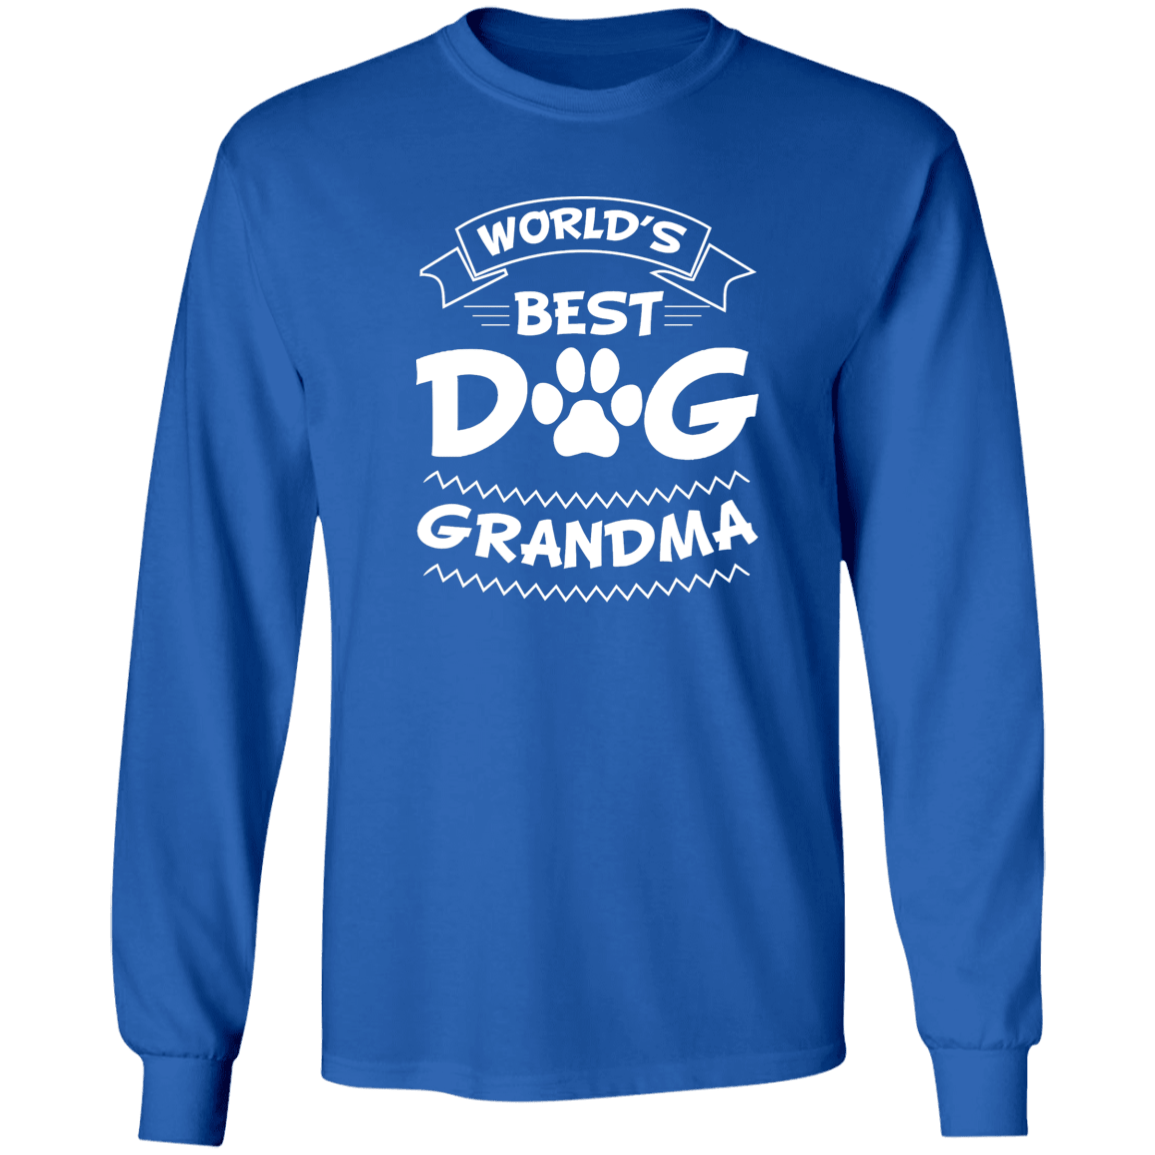 World's Best Dog Grandma - Long Sleeve T Shirt.